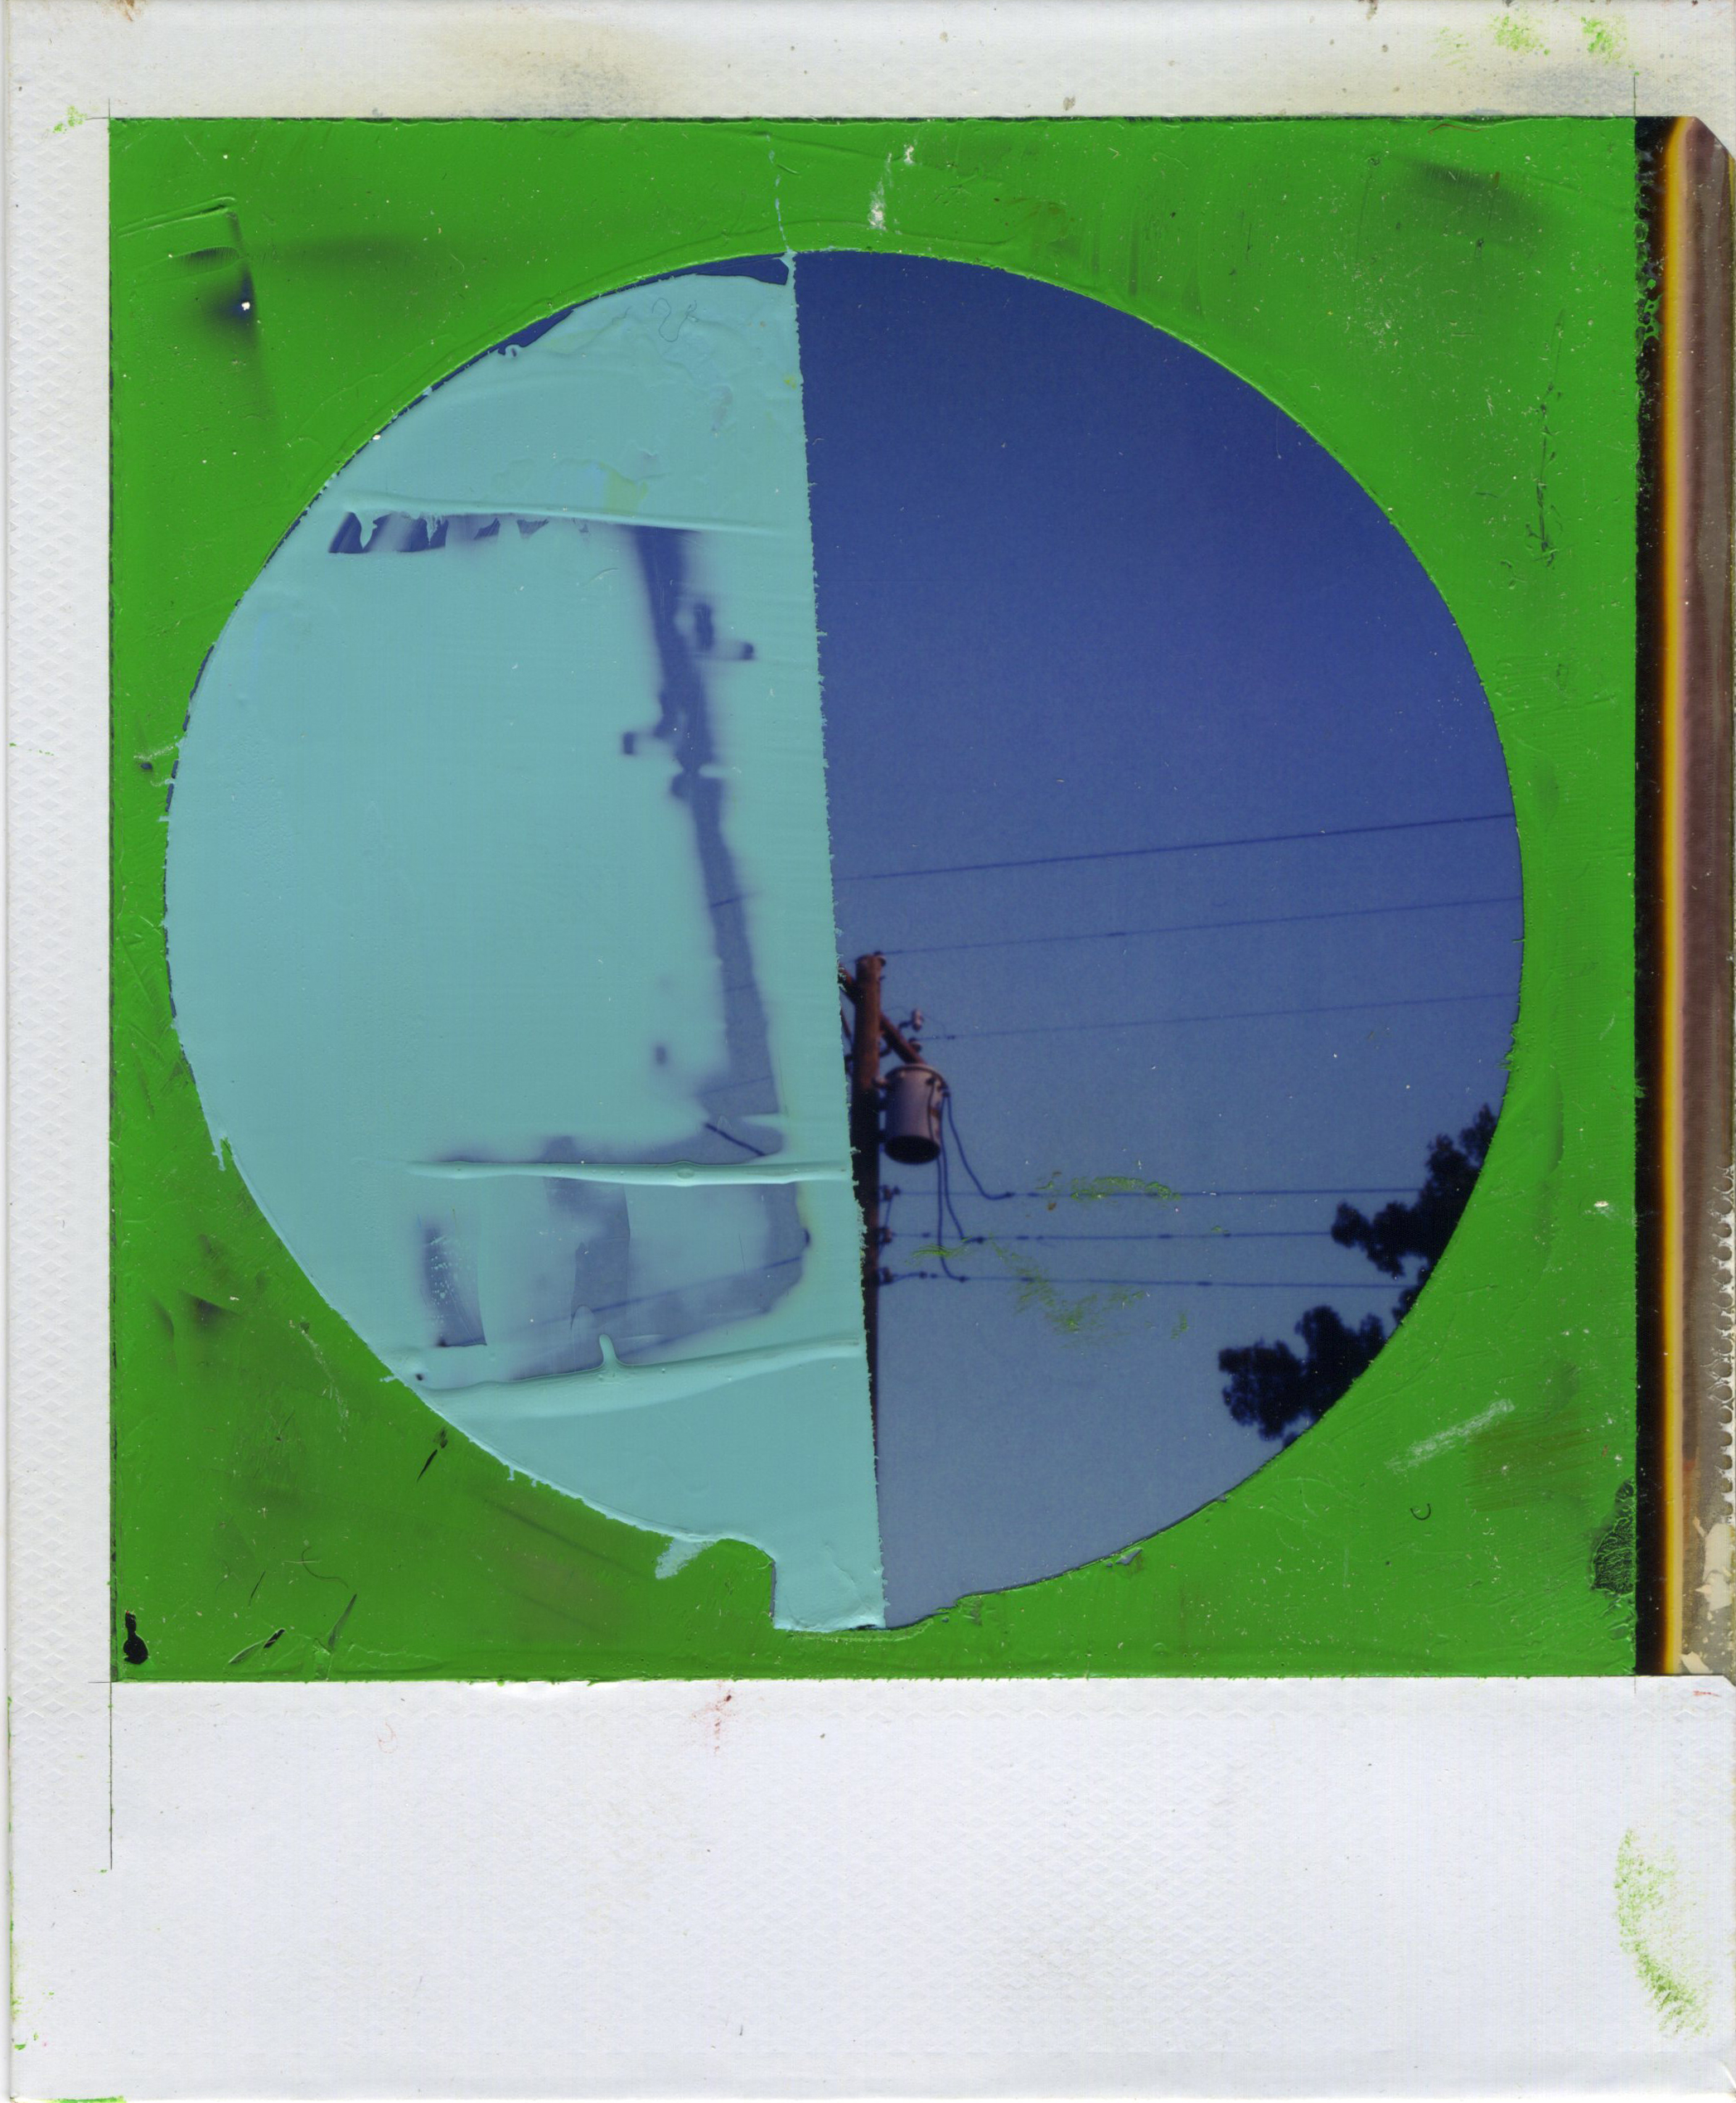   INTERSECTION (ECLIPSE)   oil on sx-70 Polaroid | 3.25" x 4.25" | 2013 